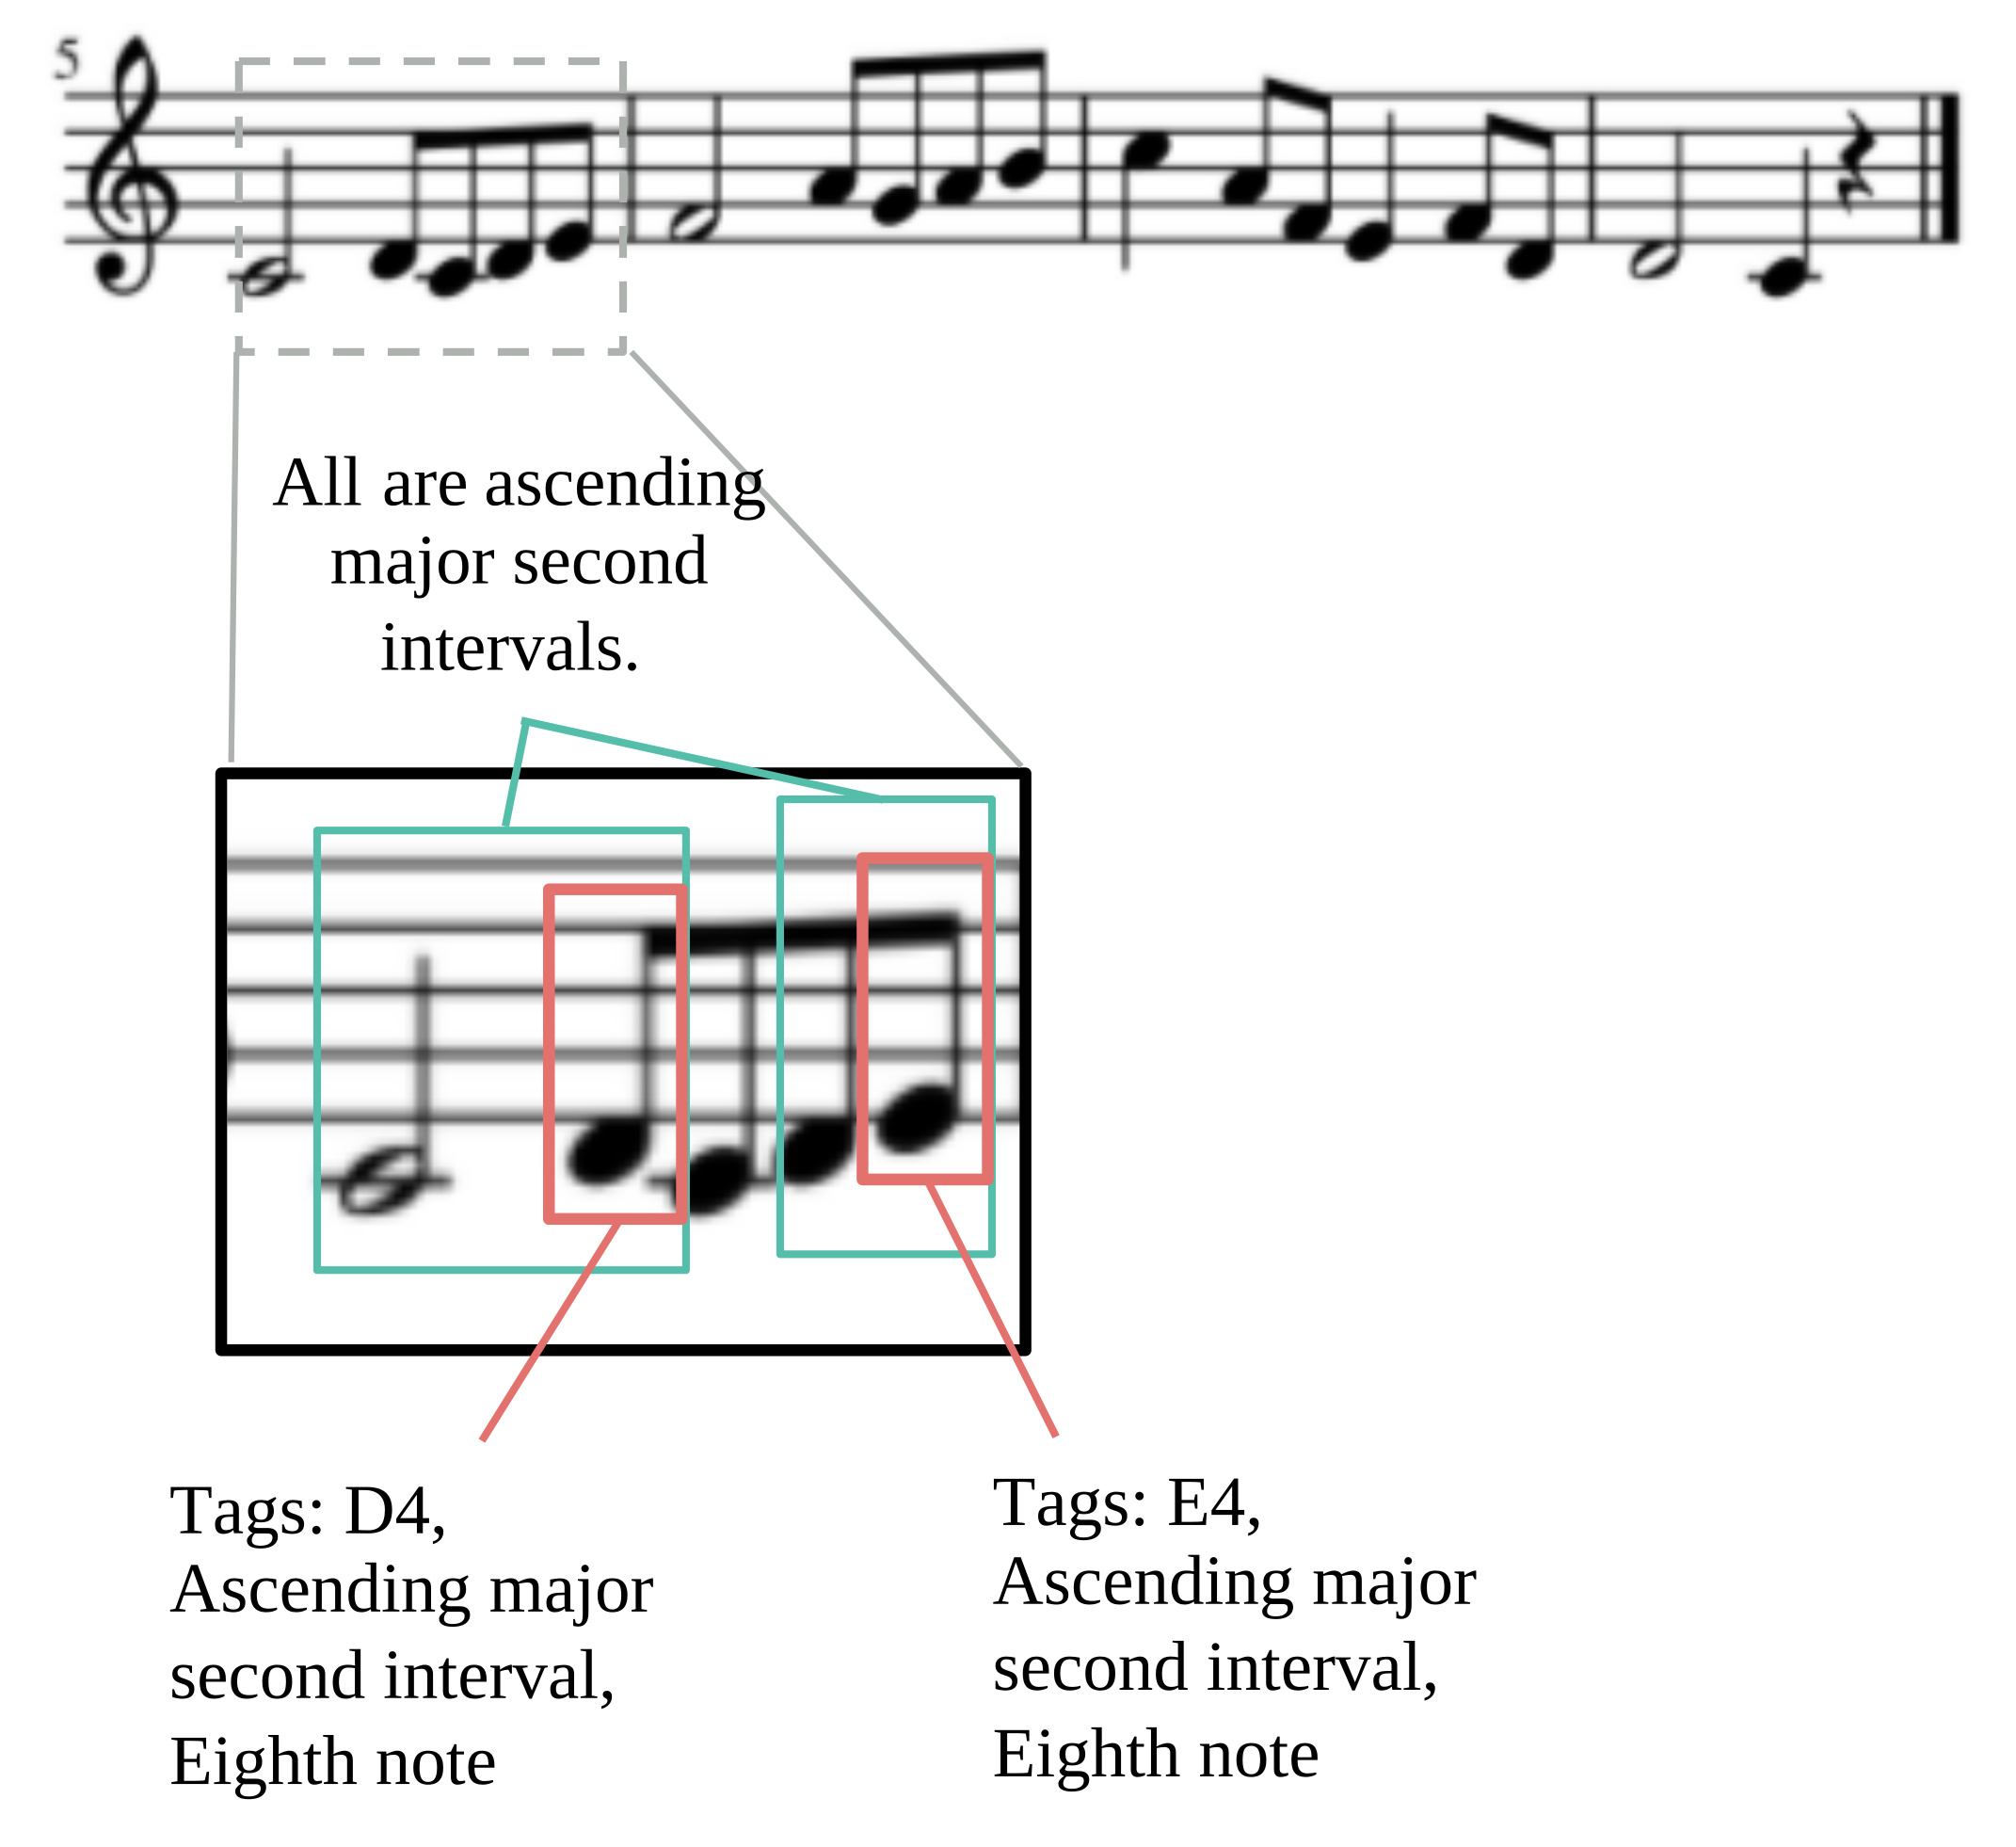 Sample diagram of a sight-singing score